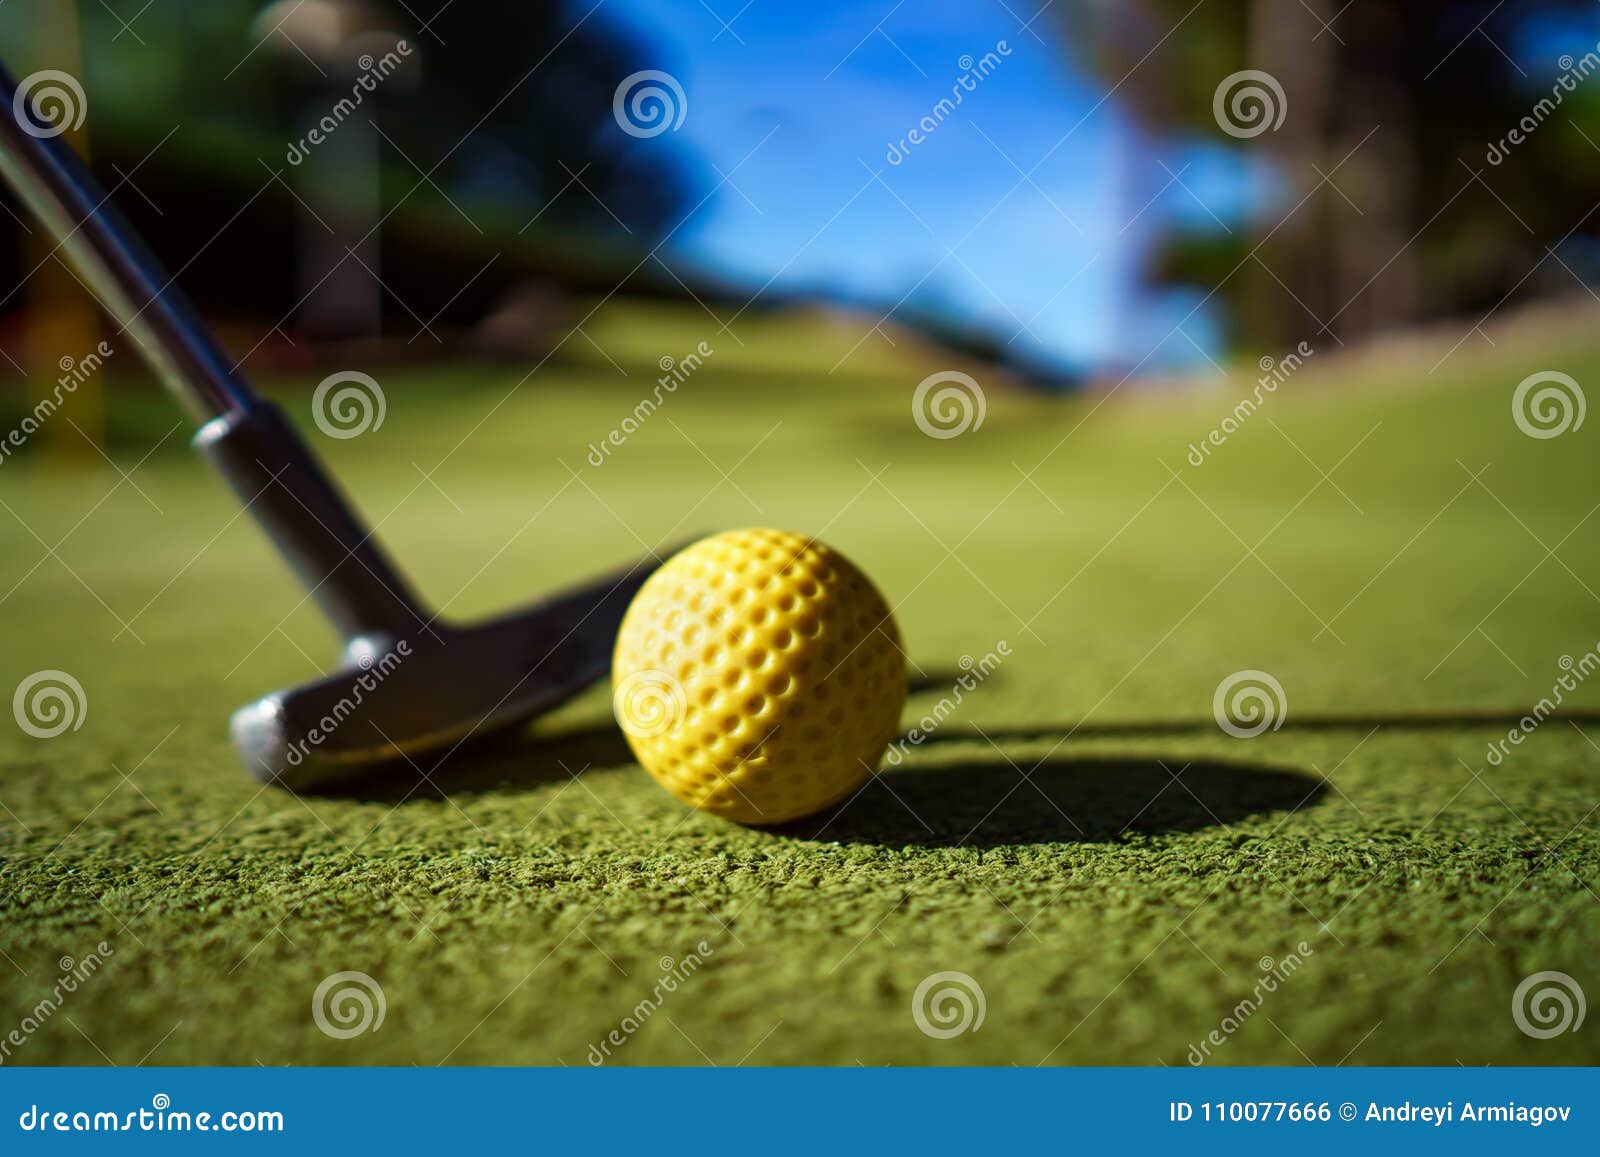 mini golf yellow ball with a bat at sunset